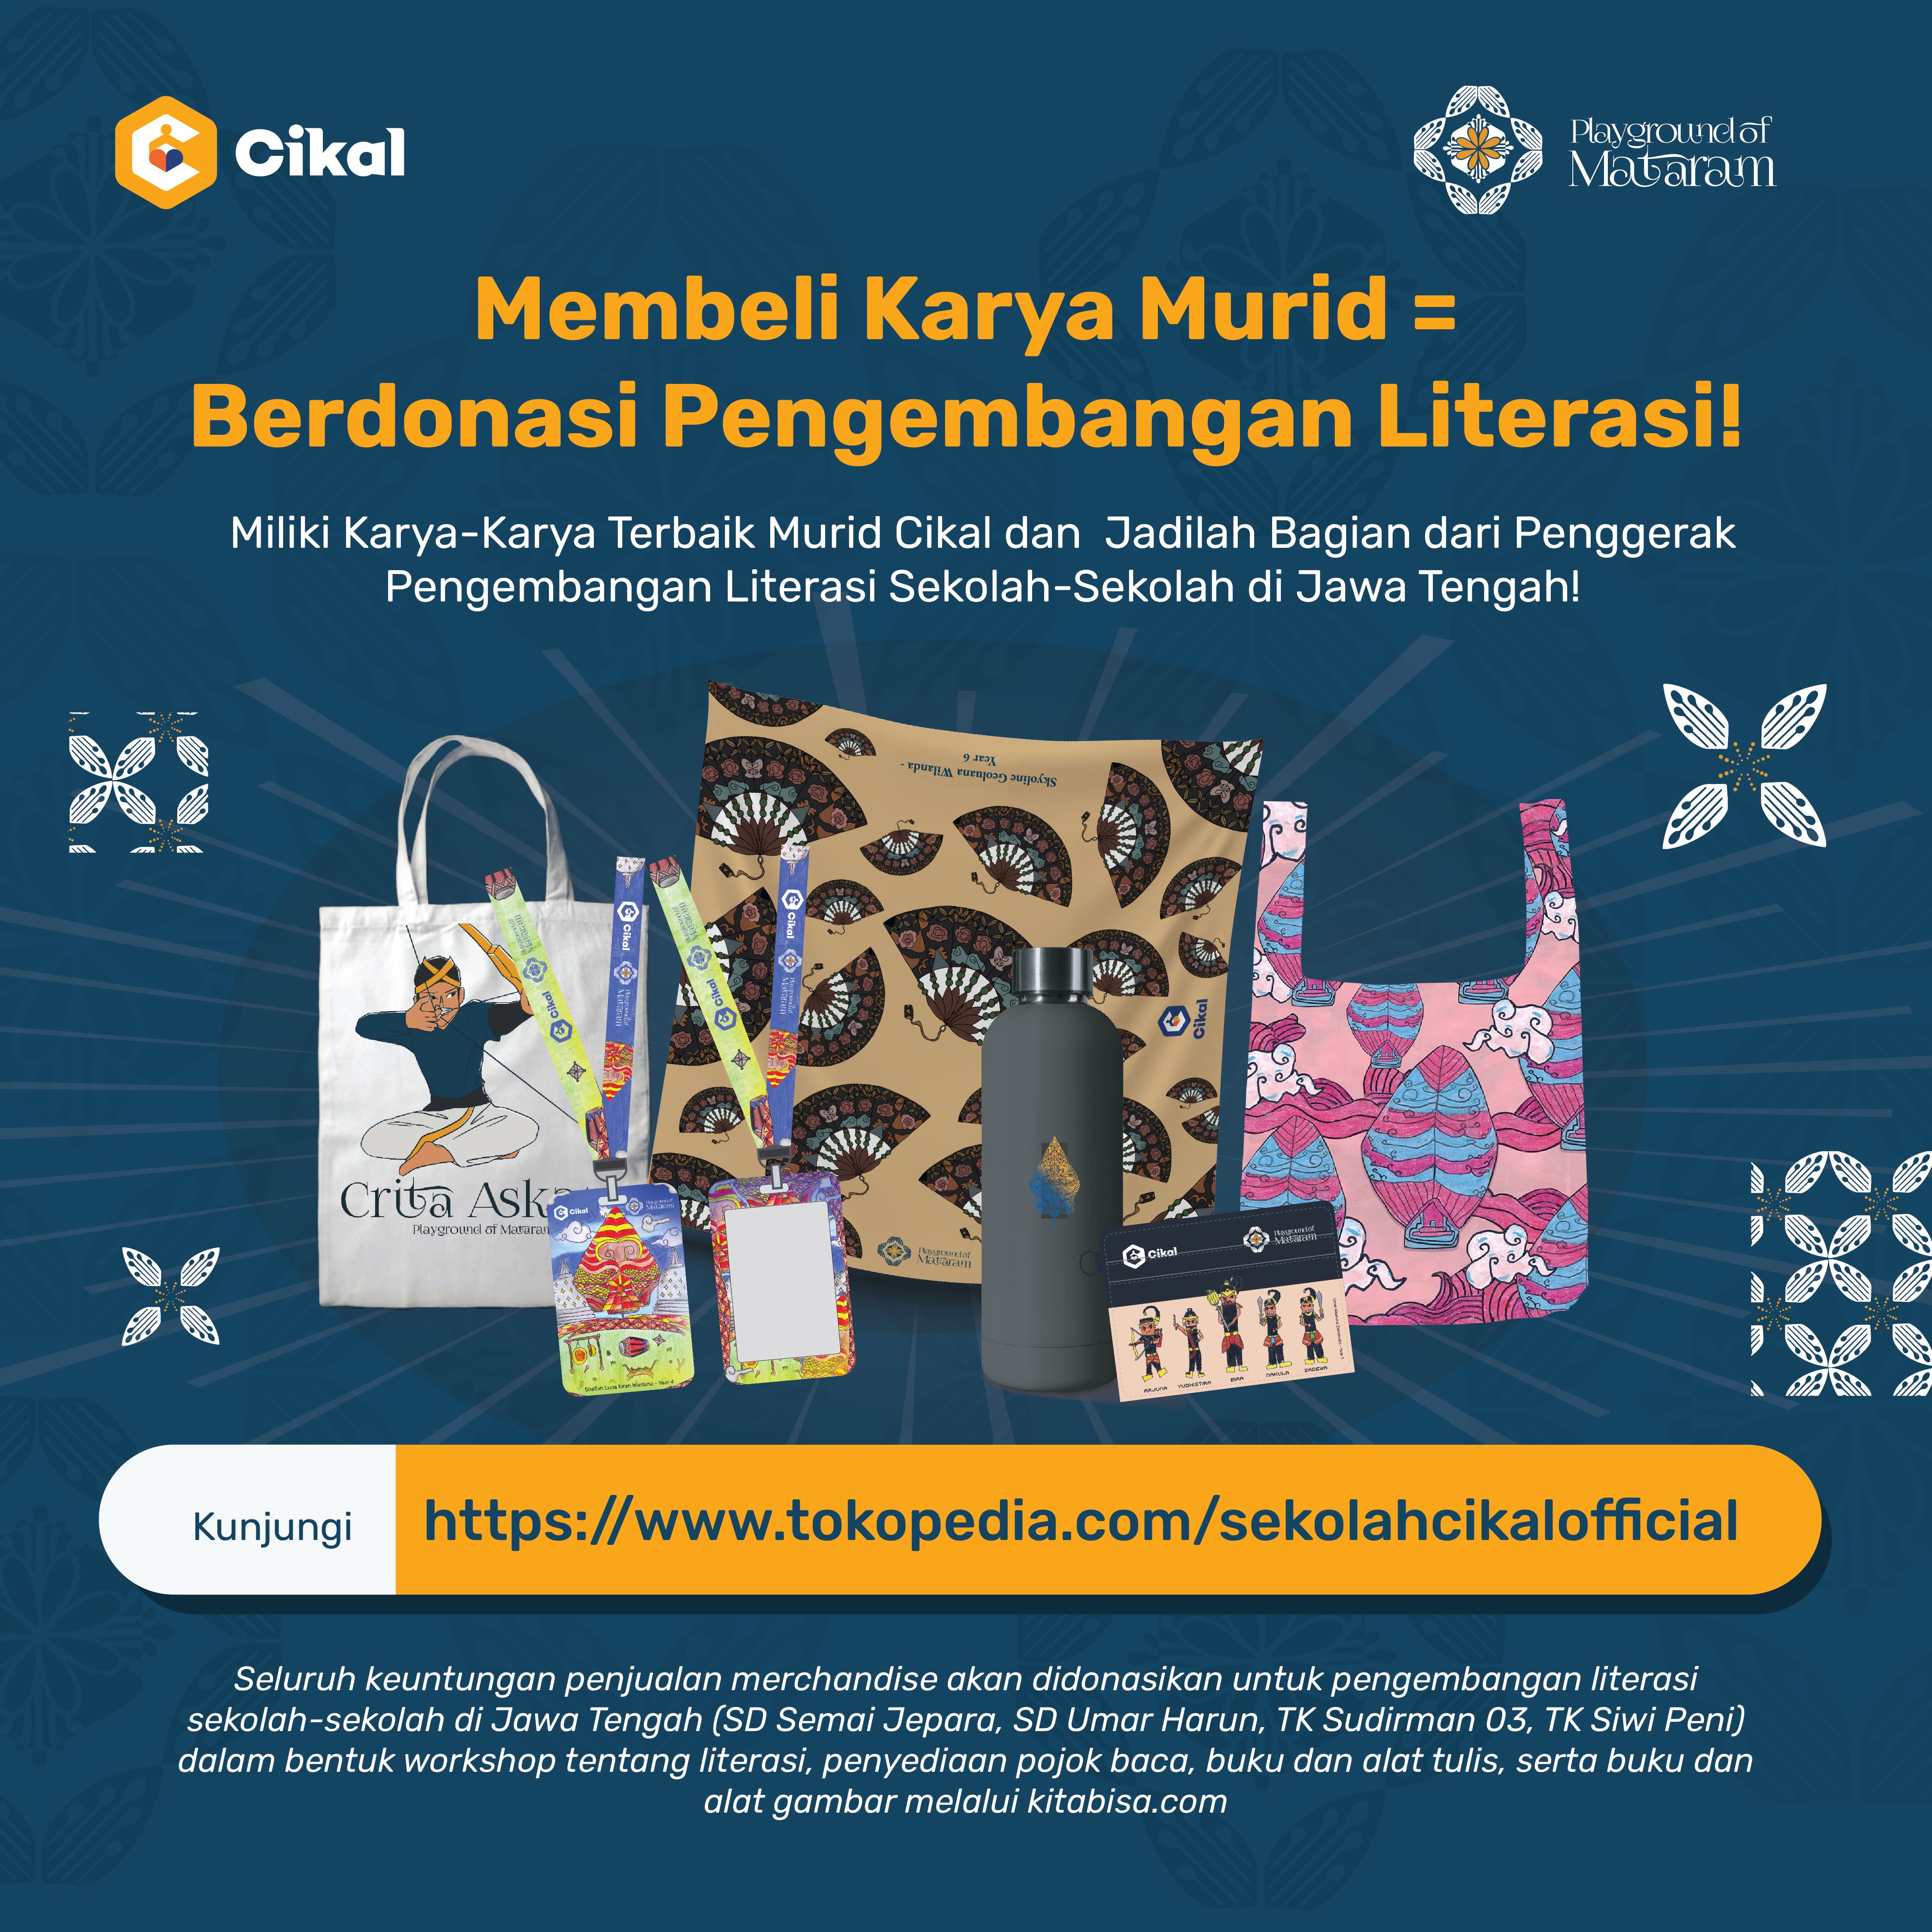 Pembelian Karya Murid Cikal Dukung Pengumpulan Donasi Pengembangan Literasi Sekolah-Sekolah di Jawa Tengah